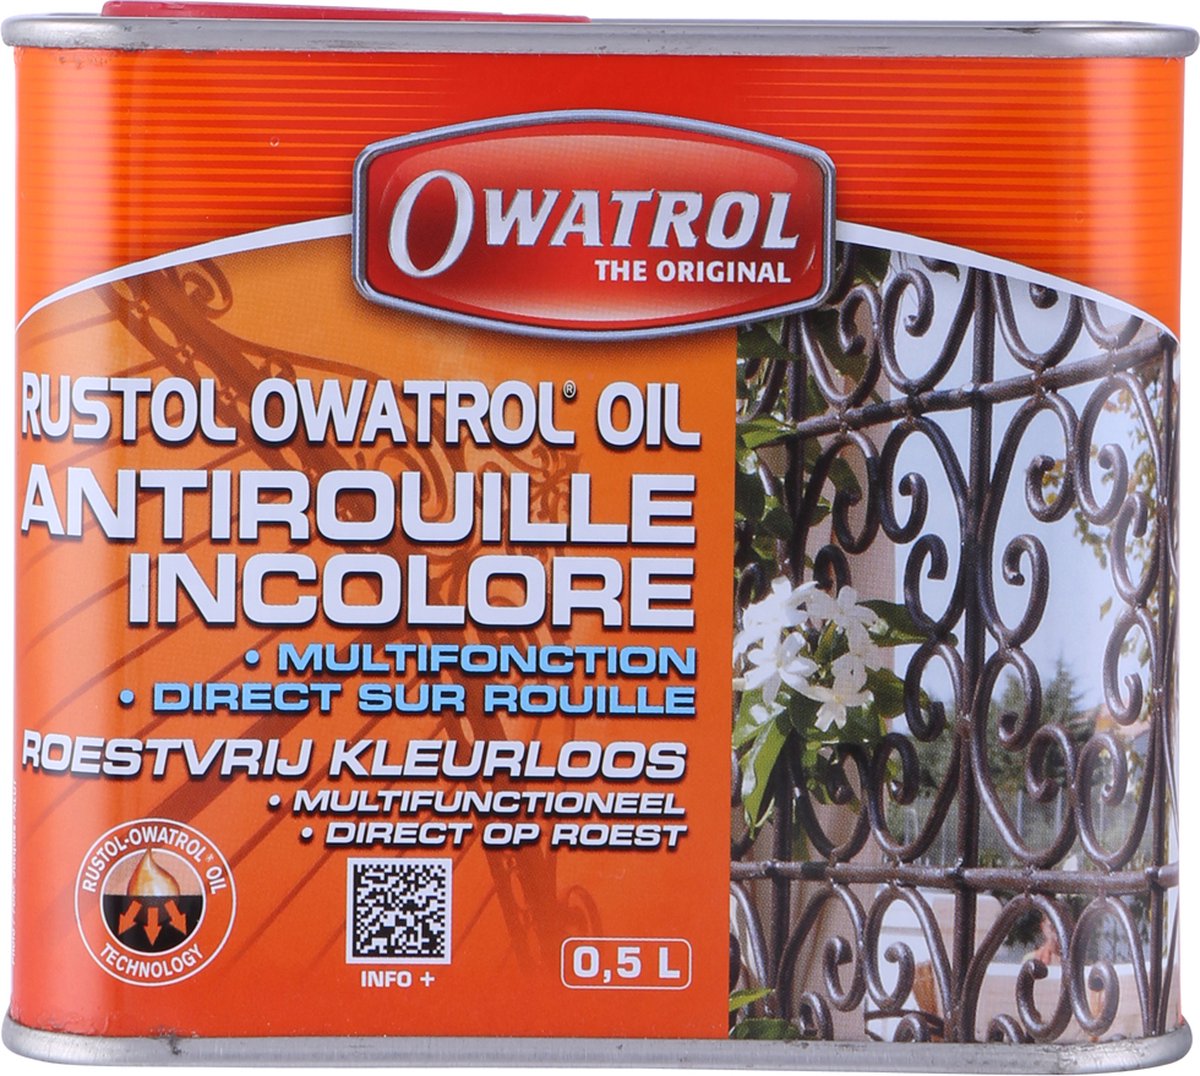 Rustol-Owatrol - Agent antirouille multifonctionnel - Owatrol - 1 L.